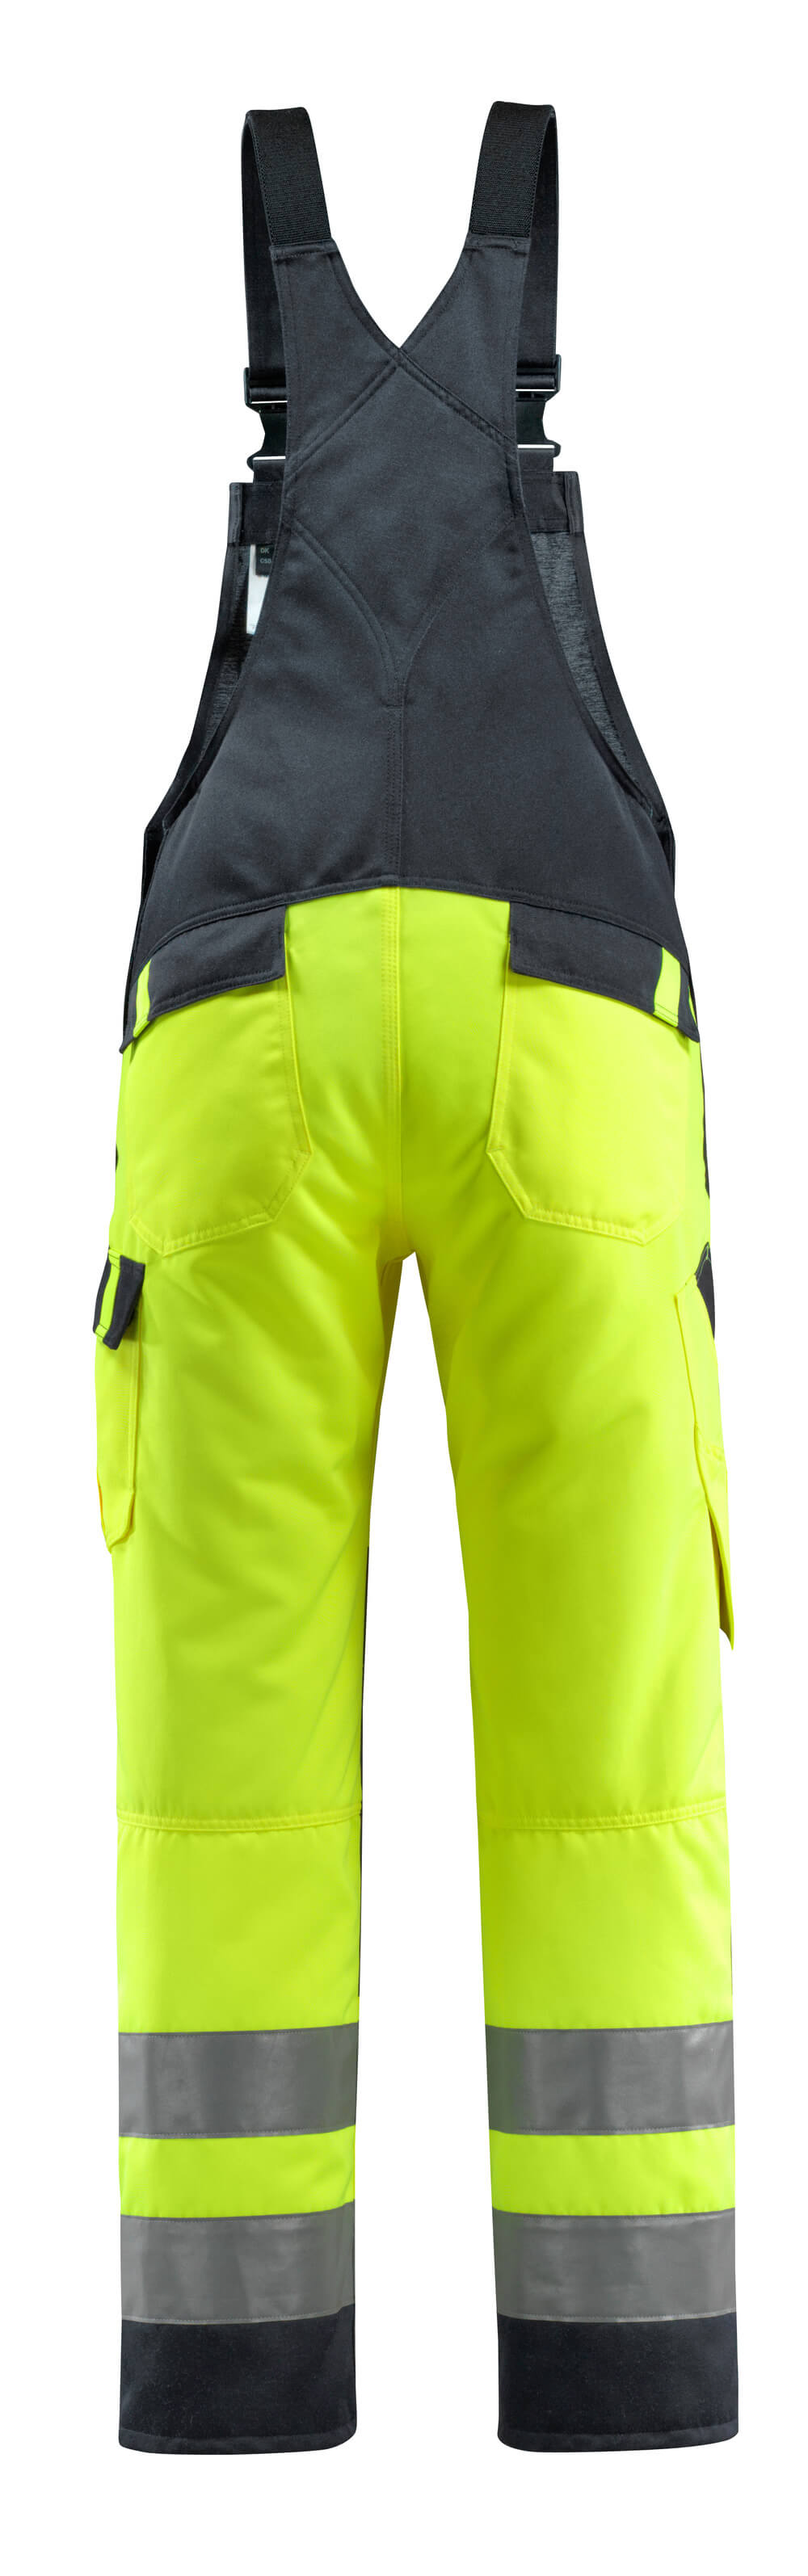 Mascot SAFE LIGHT  Gosford Bib & Brace with kneepad pockets 15969 hi-vis yellow/dark navy